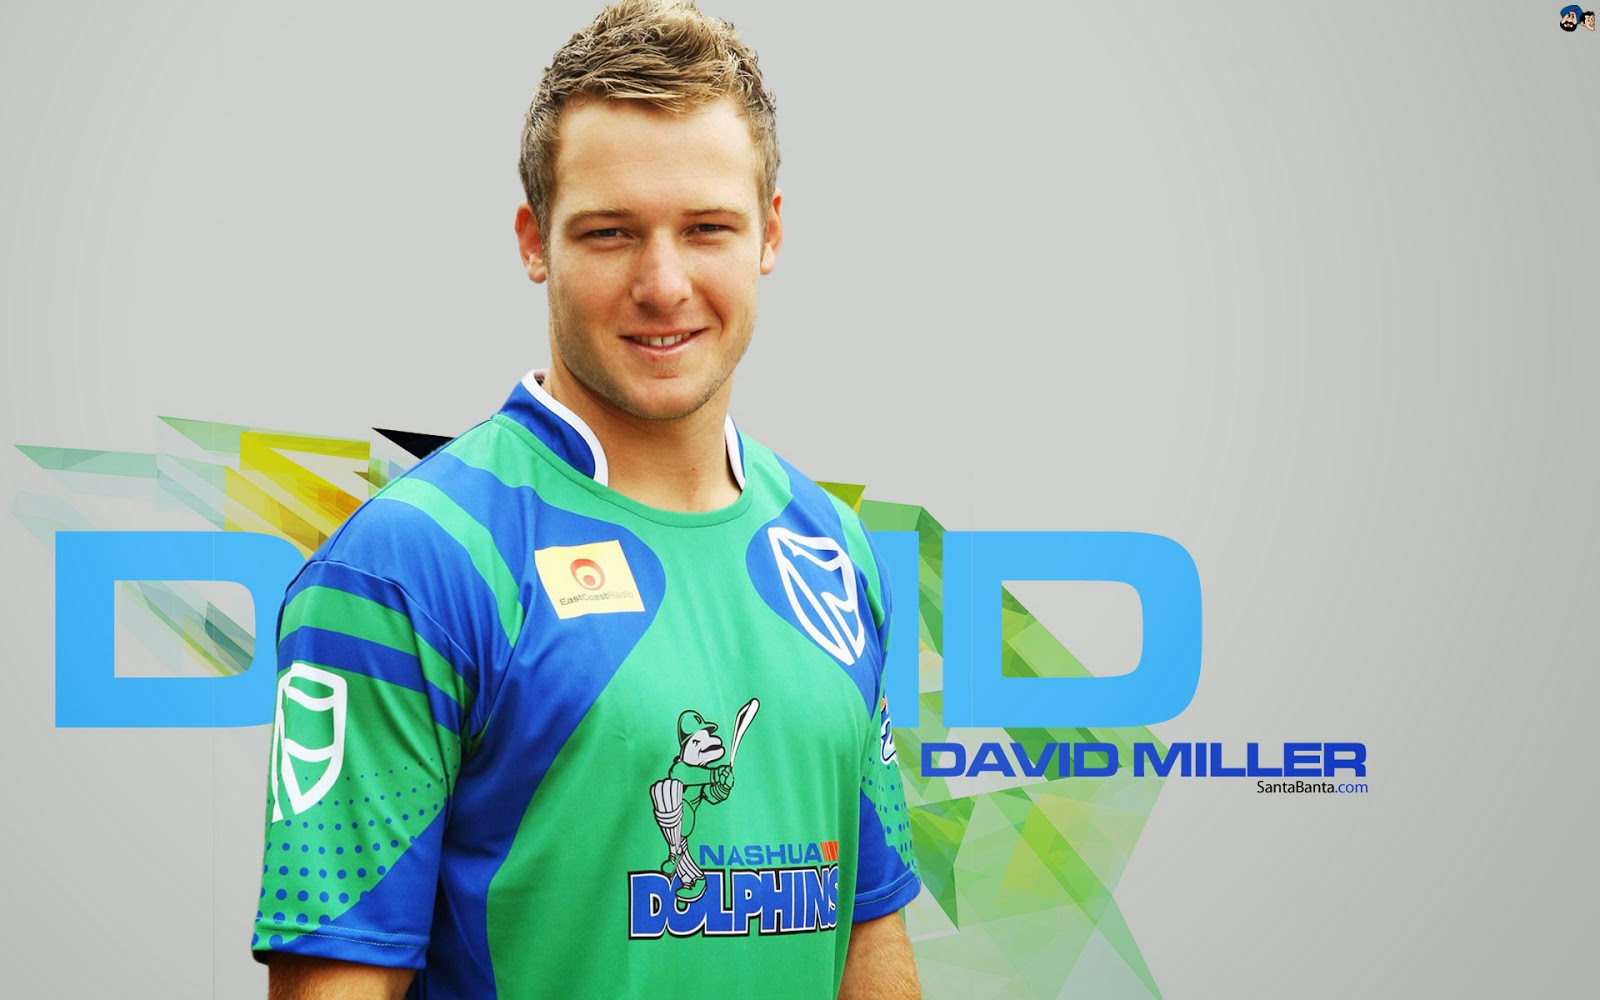 David Miller cricketer. David Miller Muckup. Миллер германия